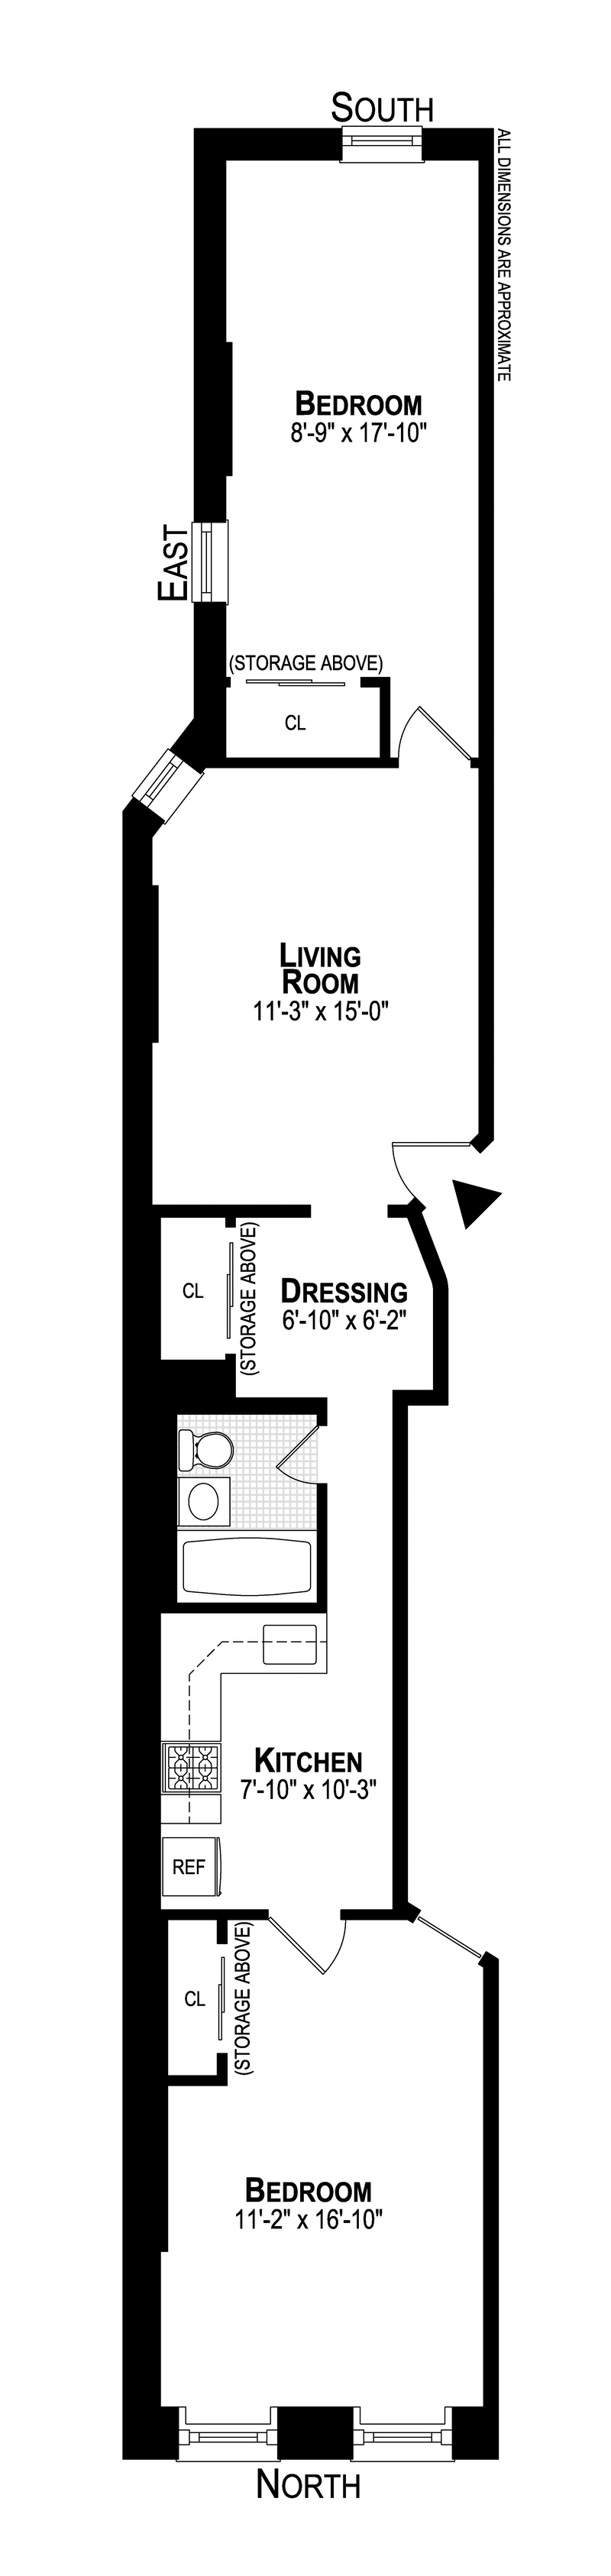 Floorplan for 108 West 17th Street, 9